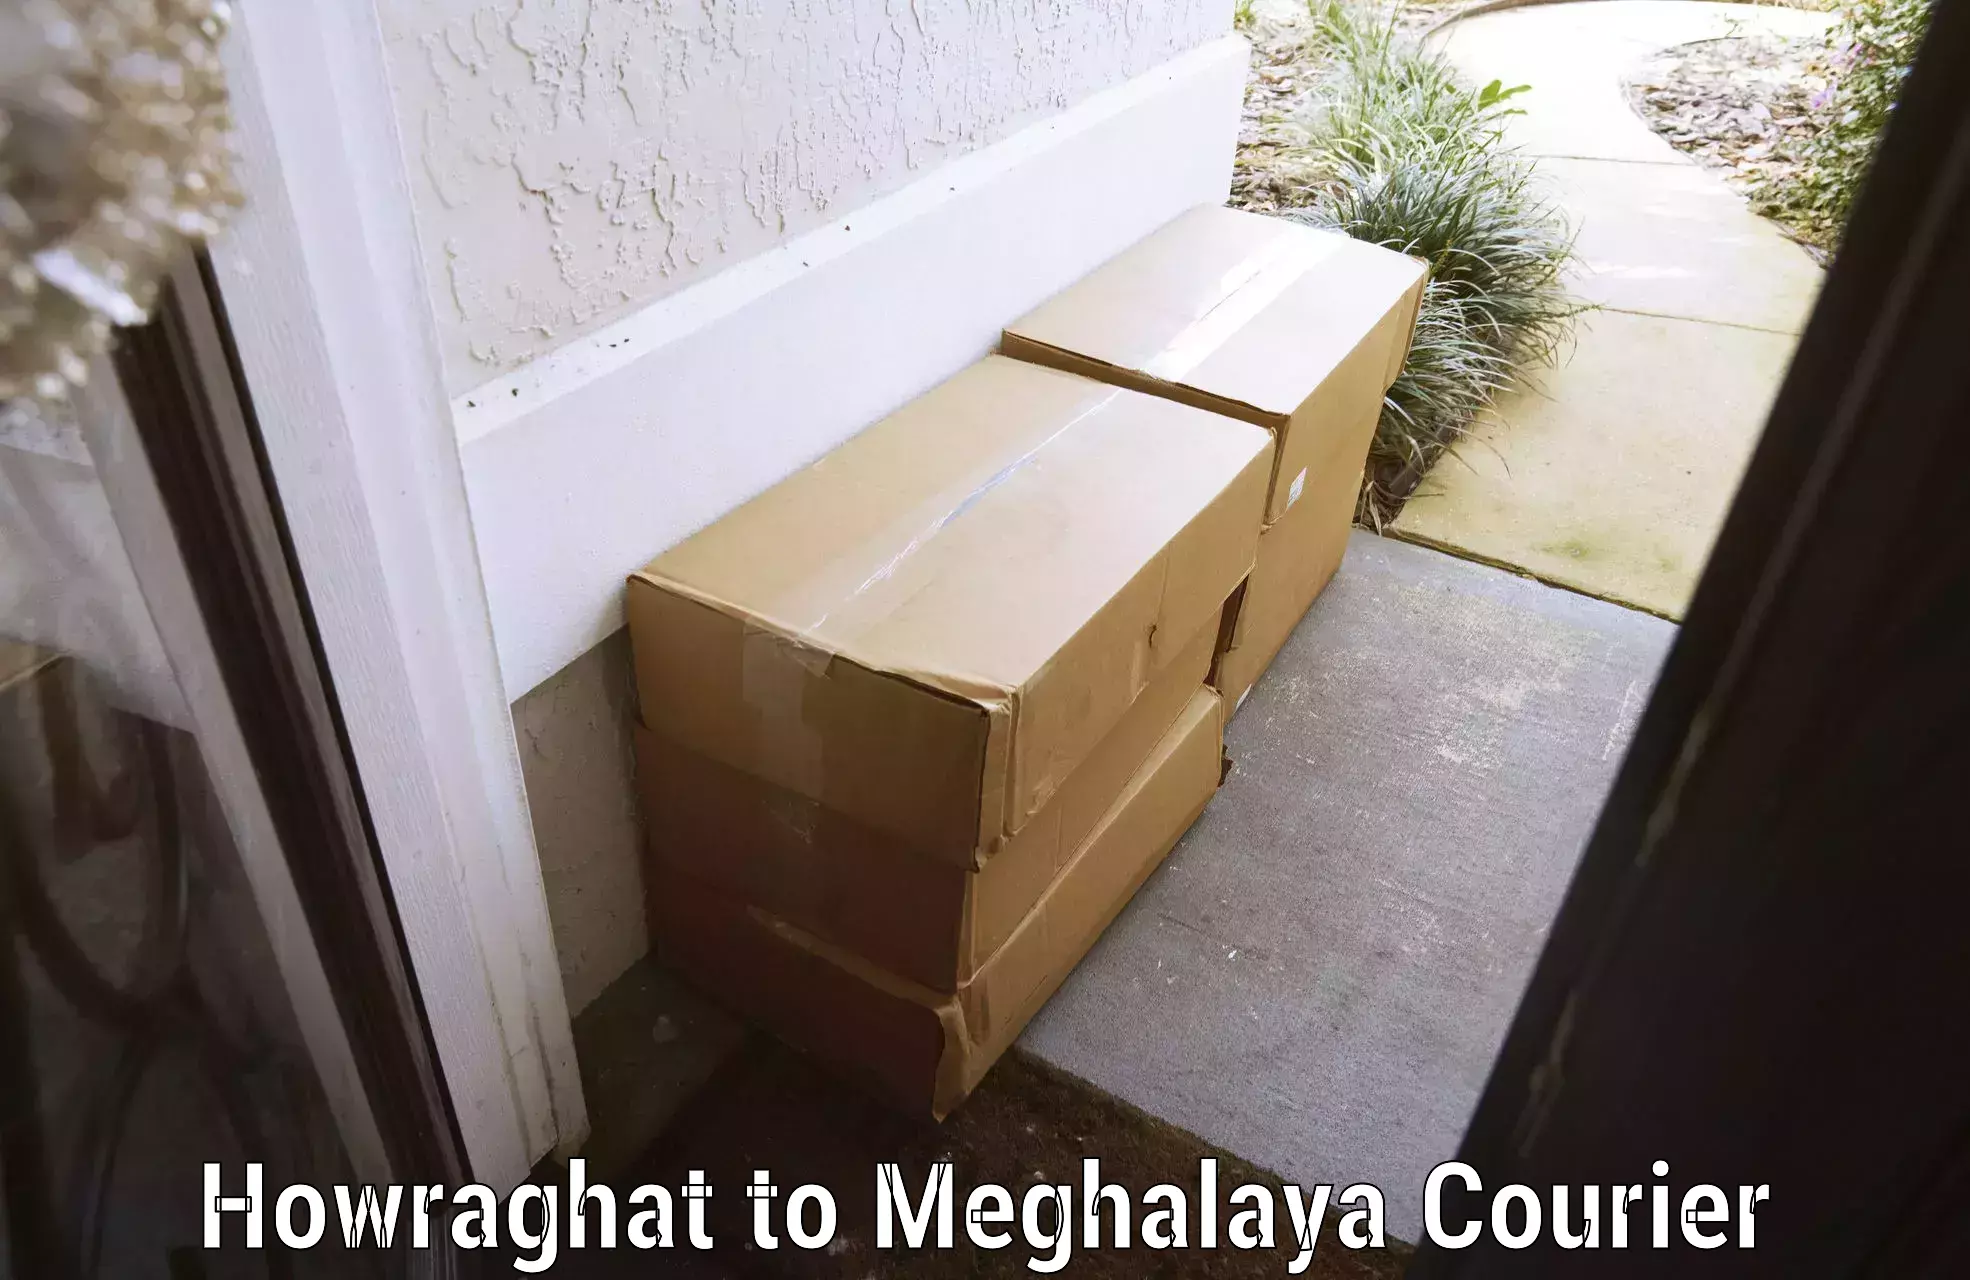 Baggage shipping schedule Howraghat to Meghalaya